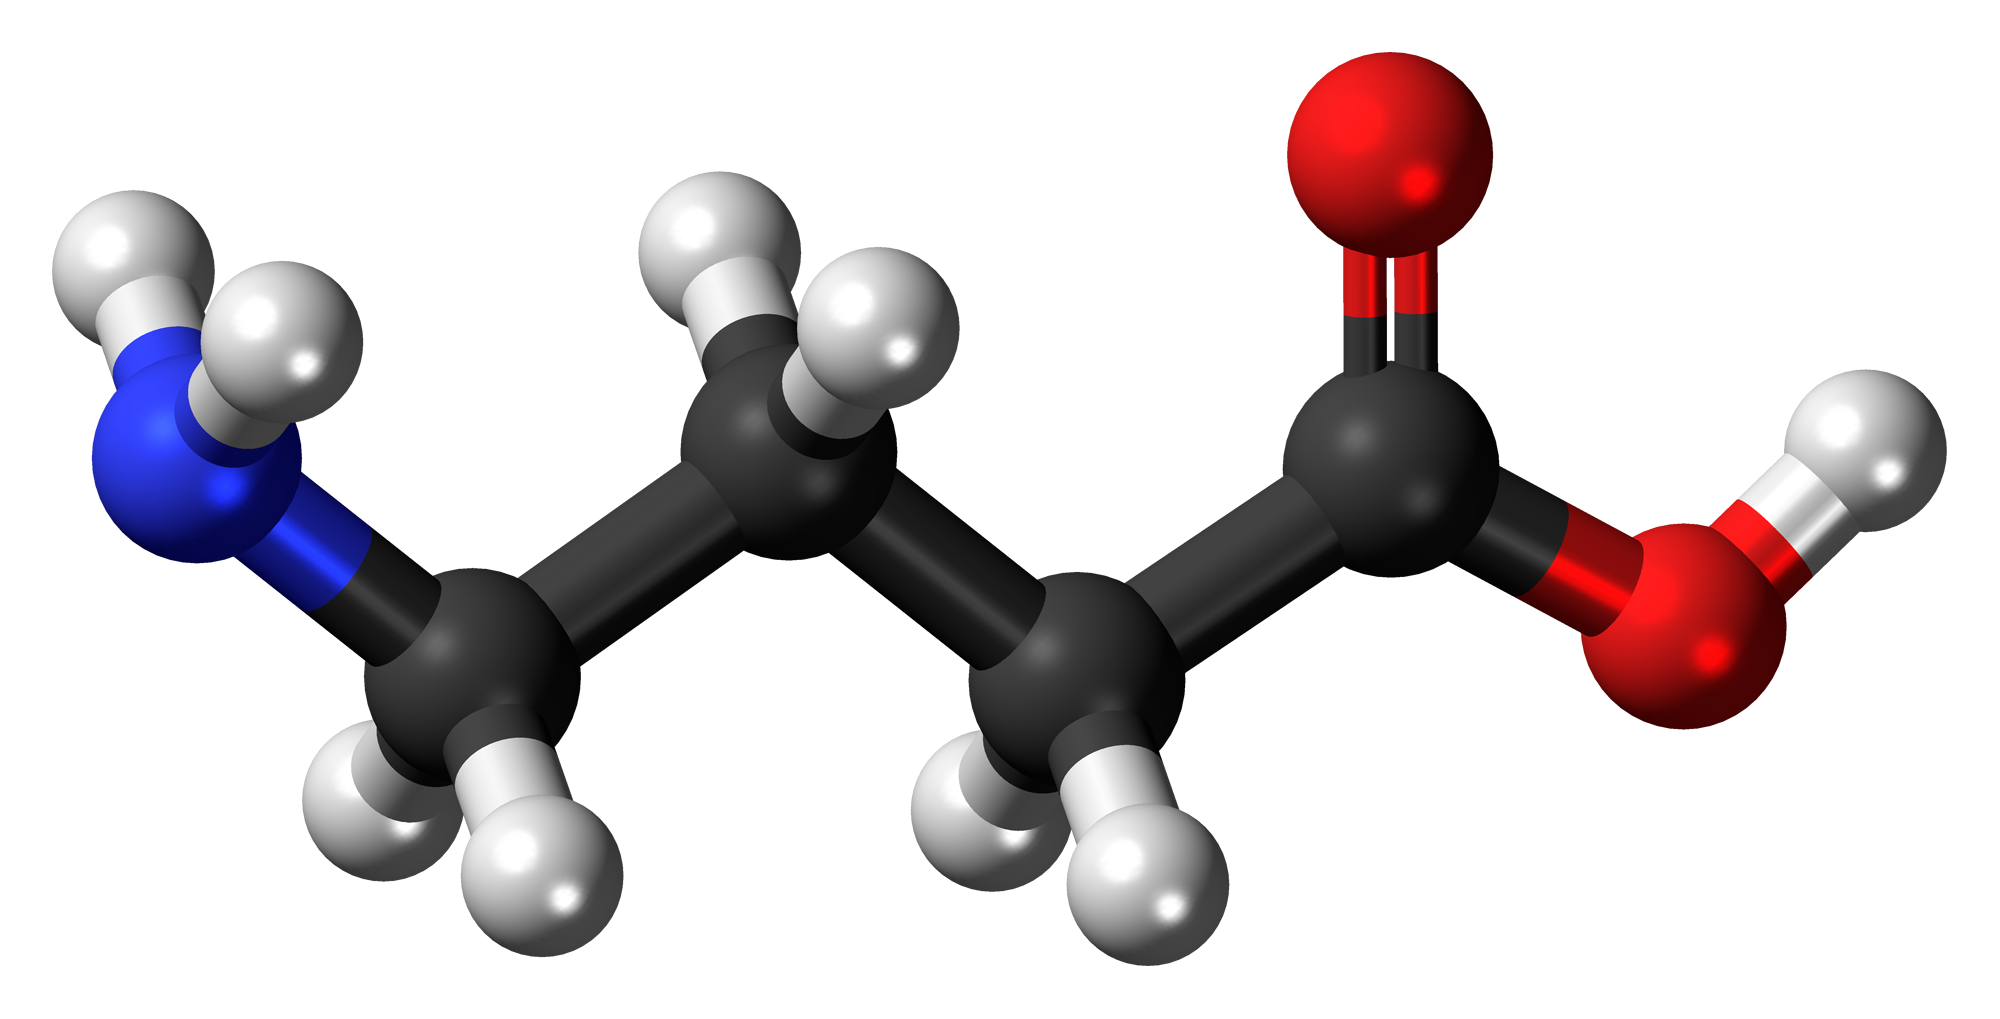 γ-aminosmörsyra eller gamma-aminosmörsyra, allmänt känd under förkortningen GABA, är den vanligaste formen av γ-aminosmörsyra.